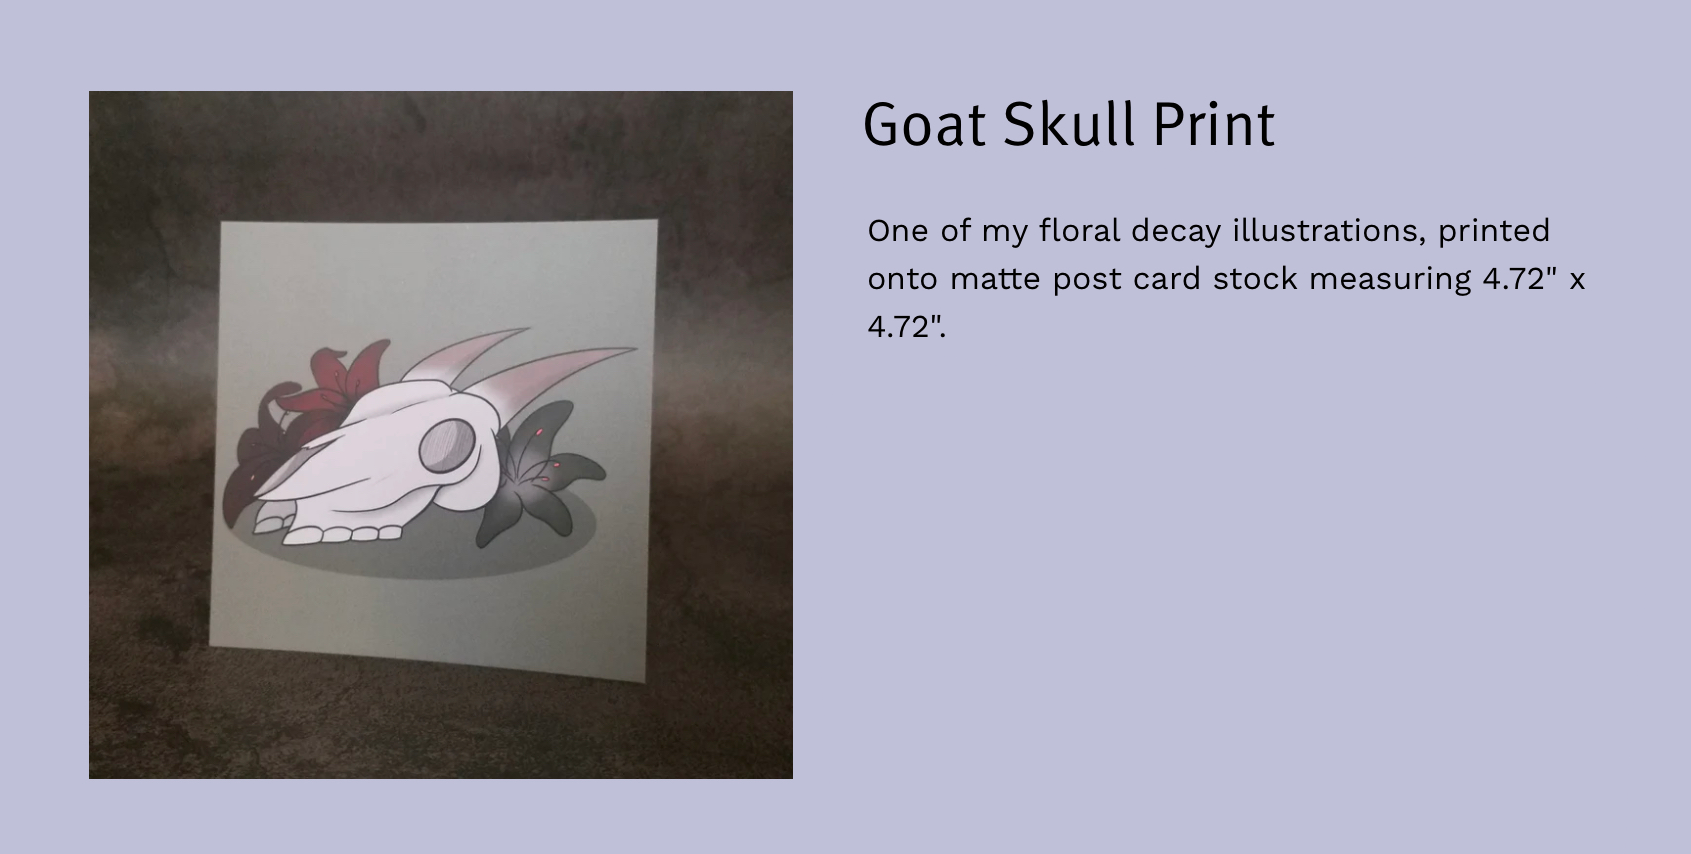 SM Goat Skull Print 4.72' by 4.72'